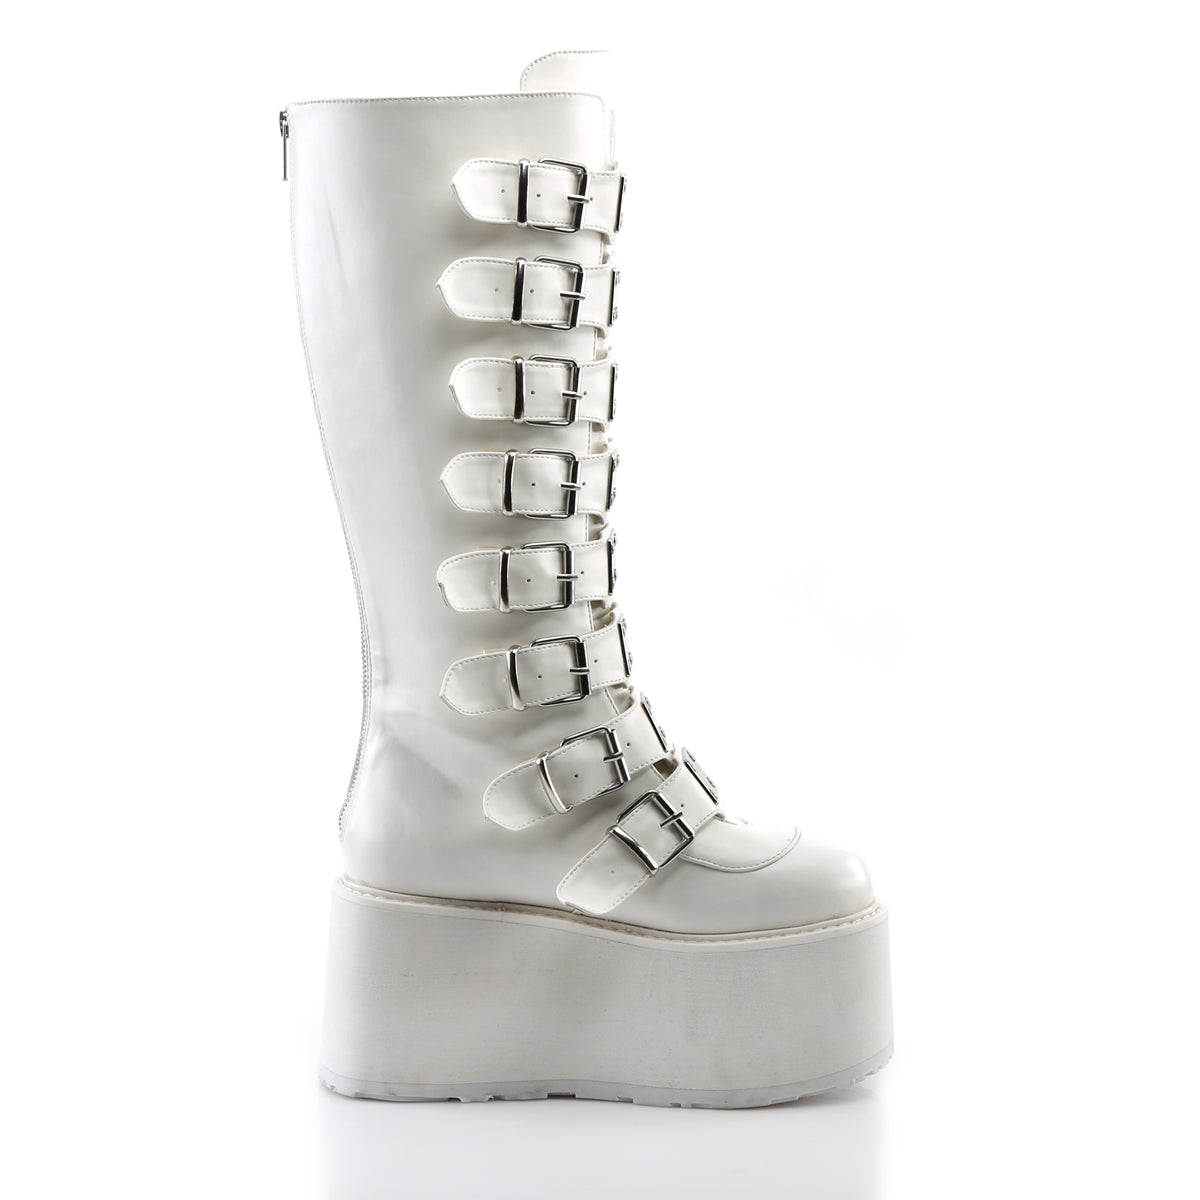 DAMNED-318 Demonia White Vegan Leather Women's Mid-Calf & Knee High Boots [Demonia Cult Alternative Footwear]